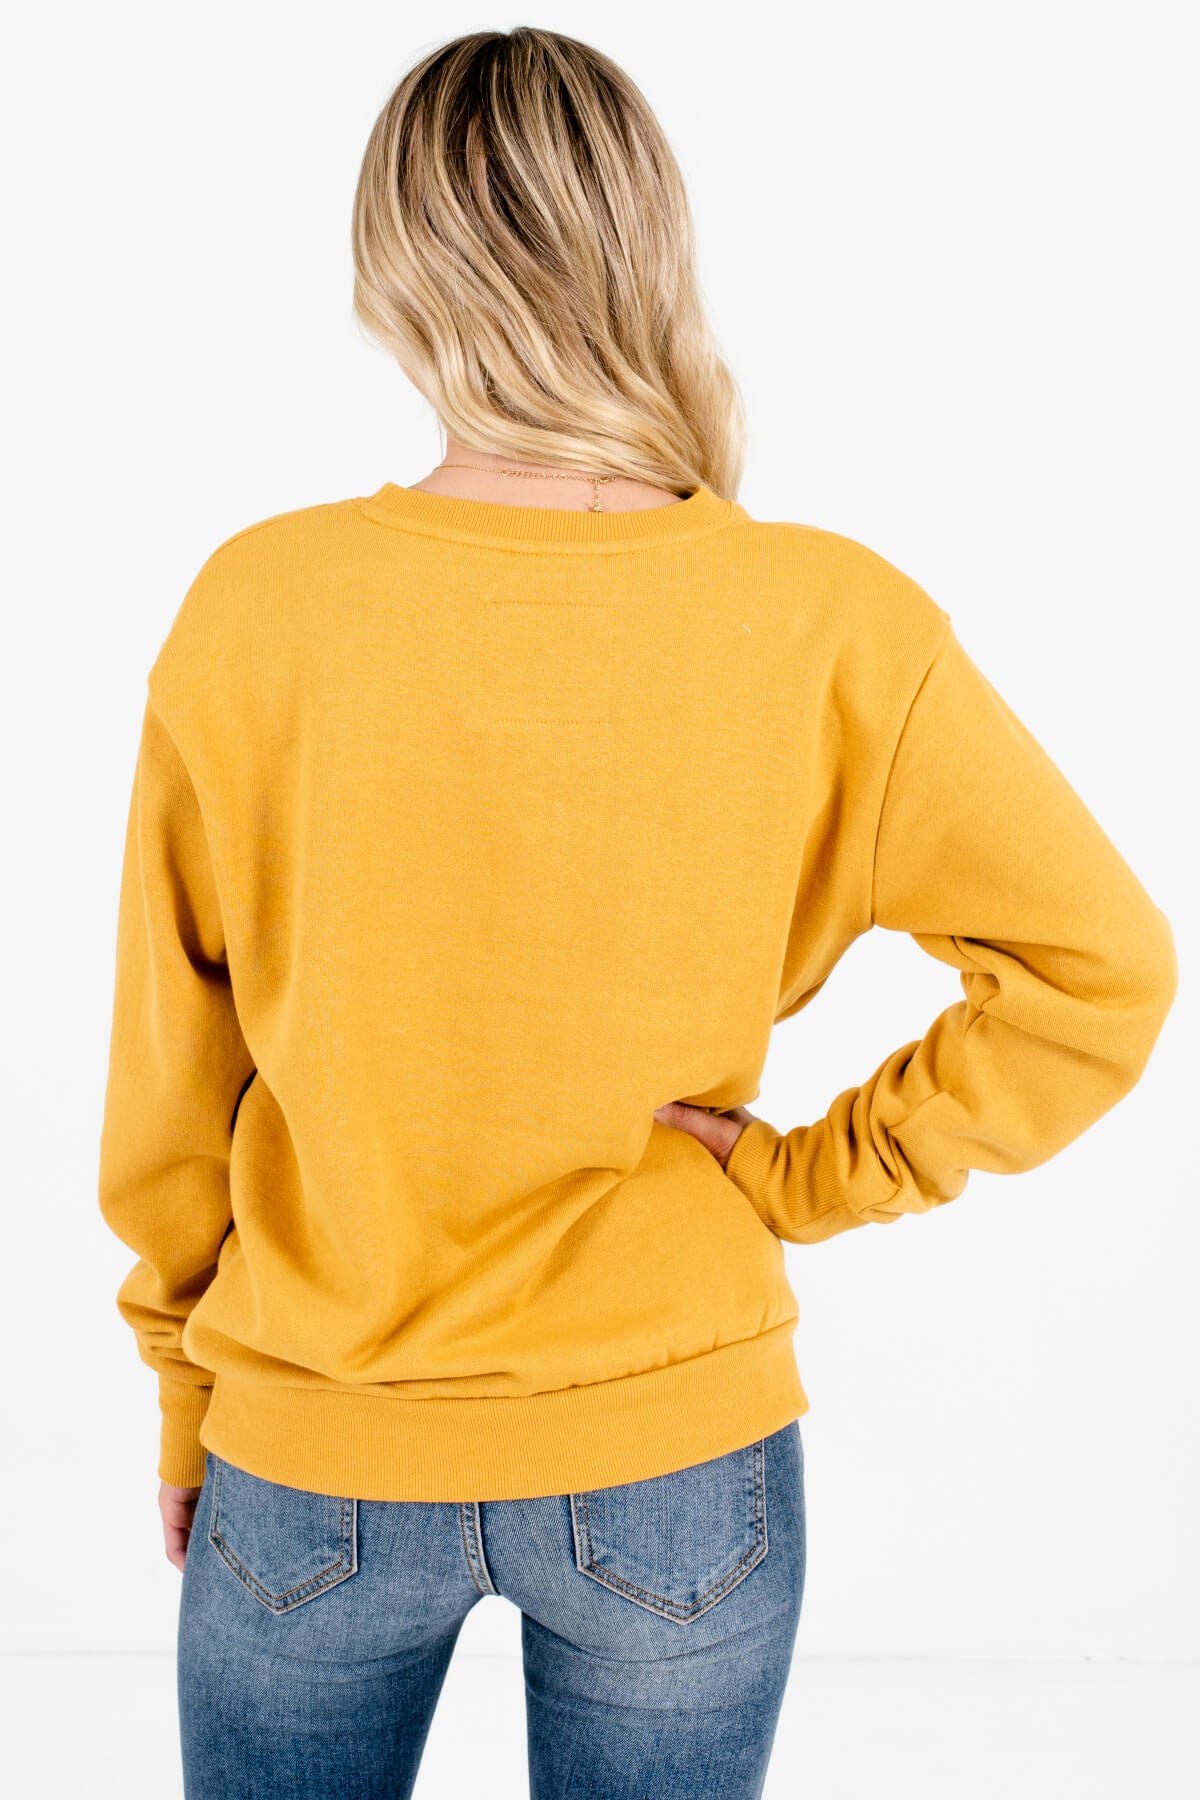 Women’s Mustard Yellow Fleece-Lined Boutique Pullover